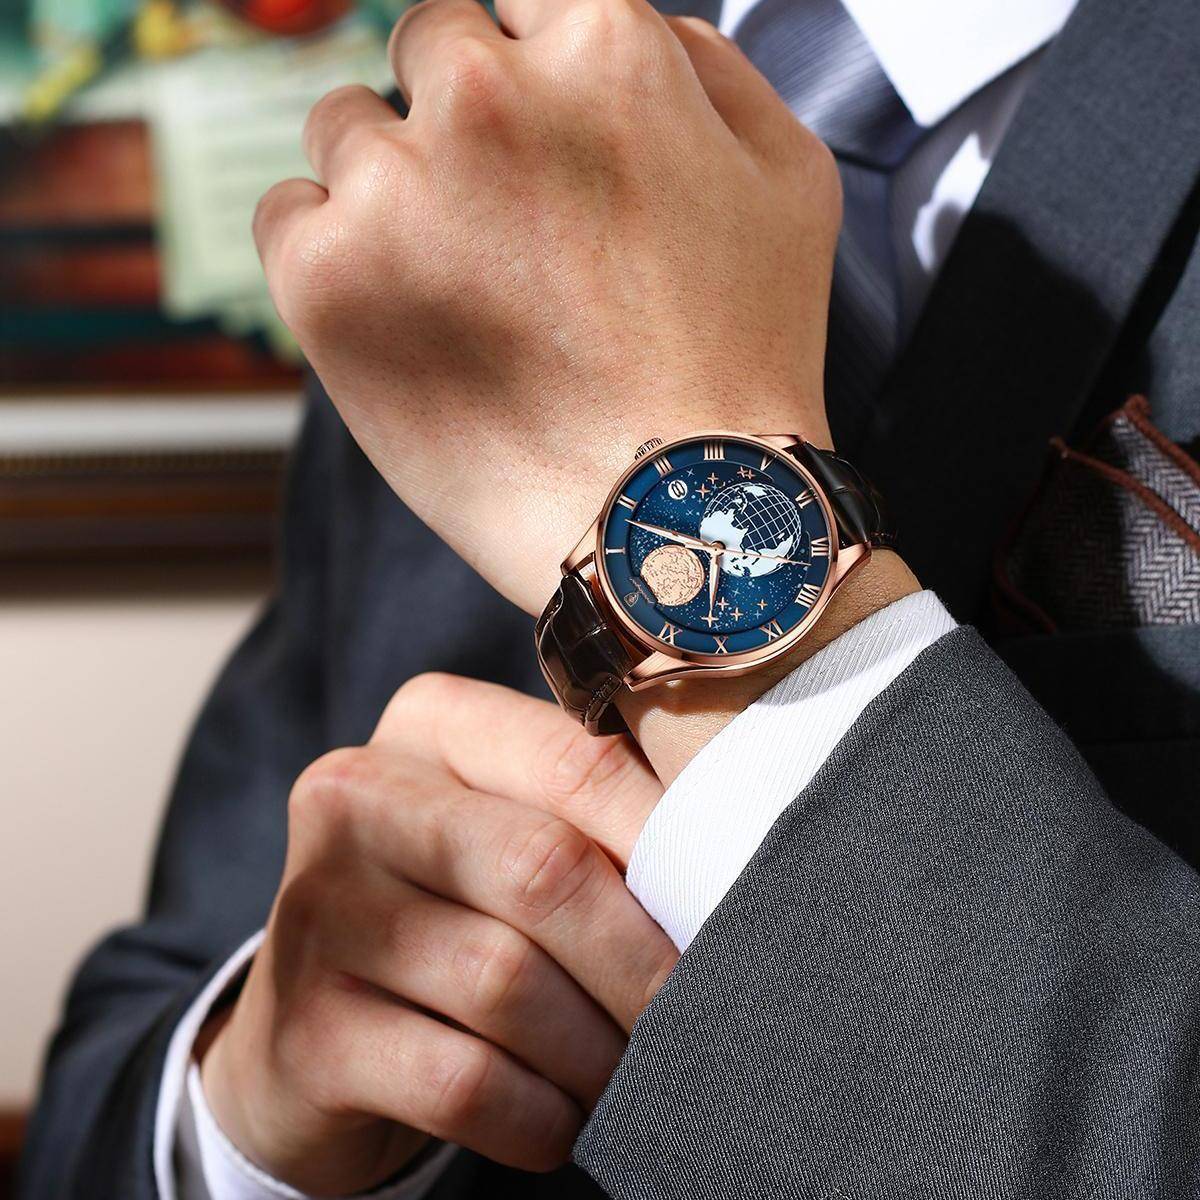 POEDAGAR New Fashion Quartz Leather Men Watch Top Brand Luxury Waterproof Luminous Date Mens Wristwatch Casual Sport Watches Color : RG BK L|SL BU L|RG BU L|SL BK L